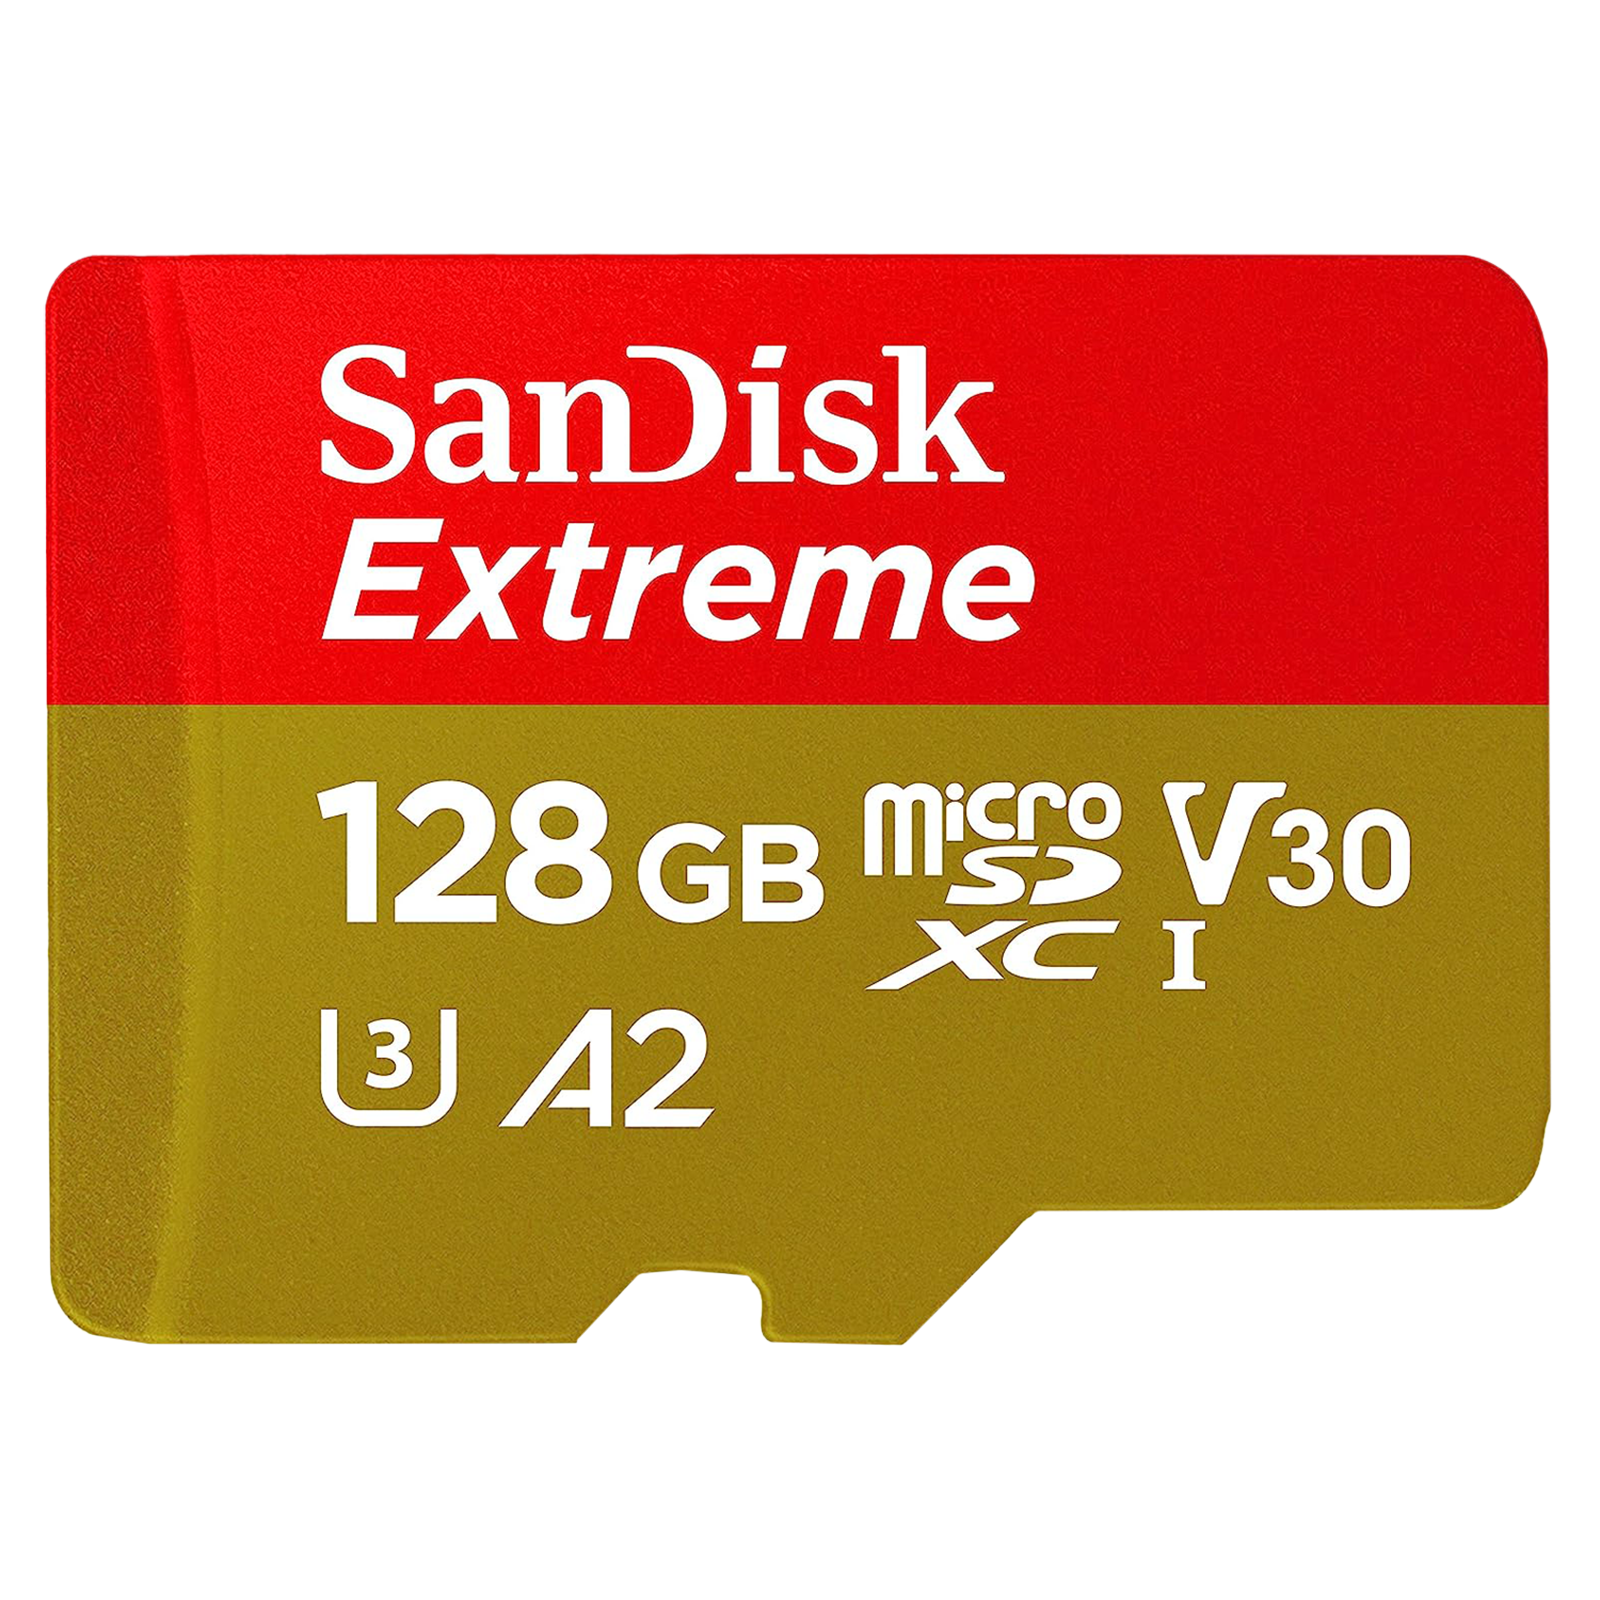 SanDisk Extreme MicroSDXC 128GB Class 3 190MB/s Memory Card